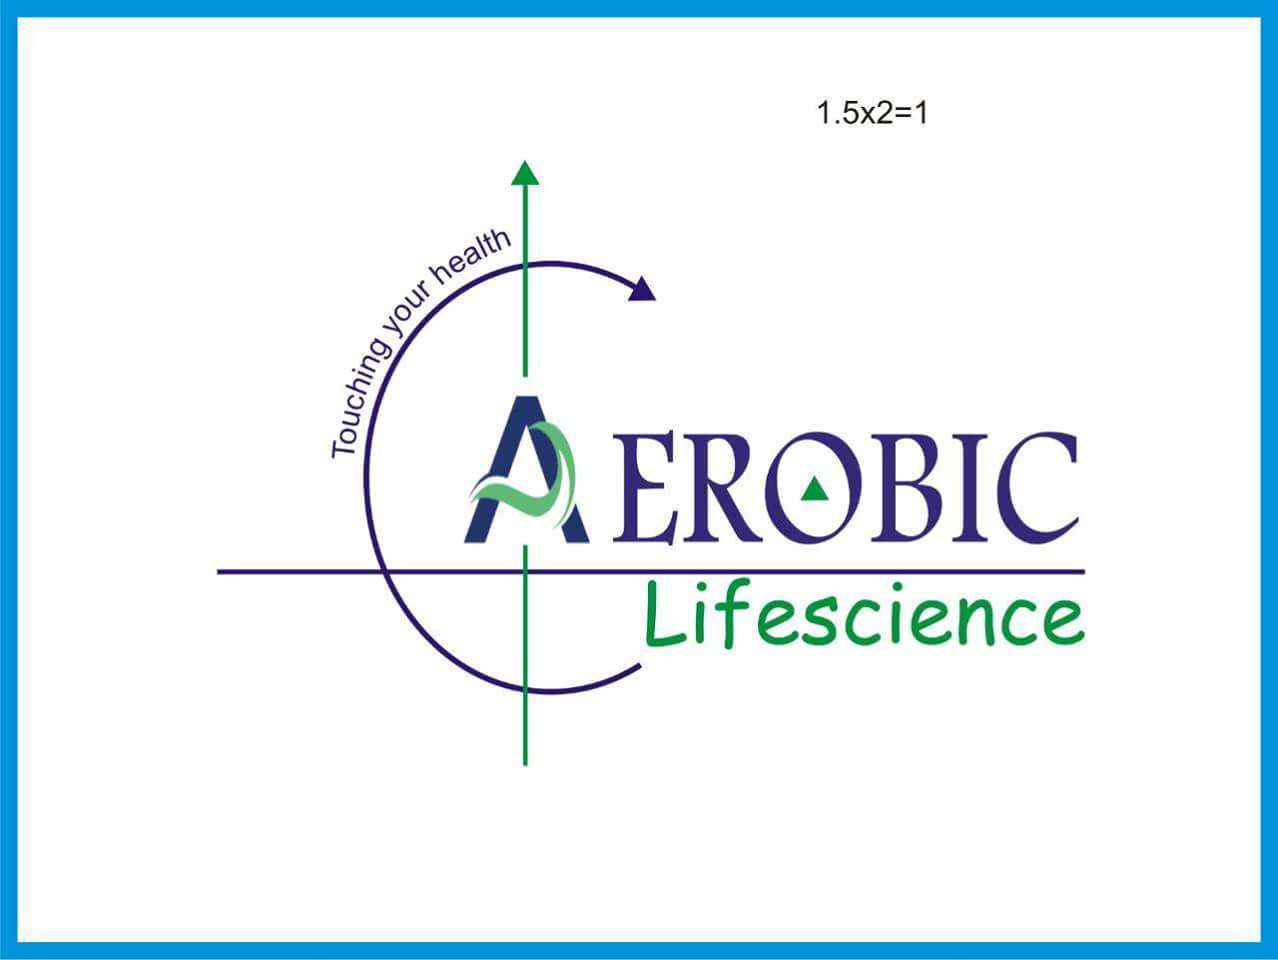 Aerobic Lifescience